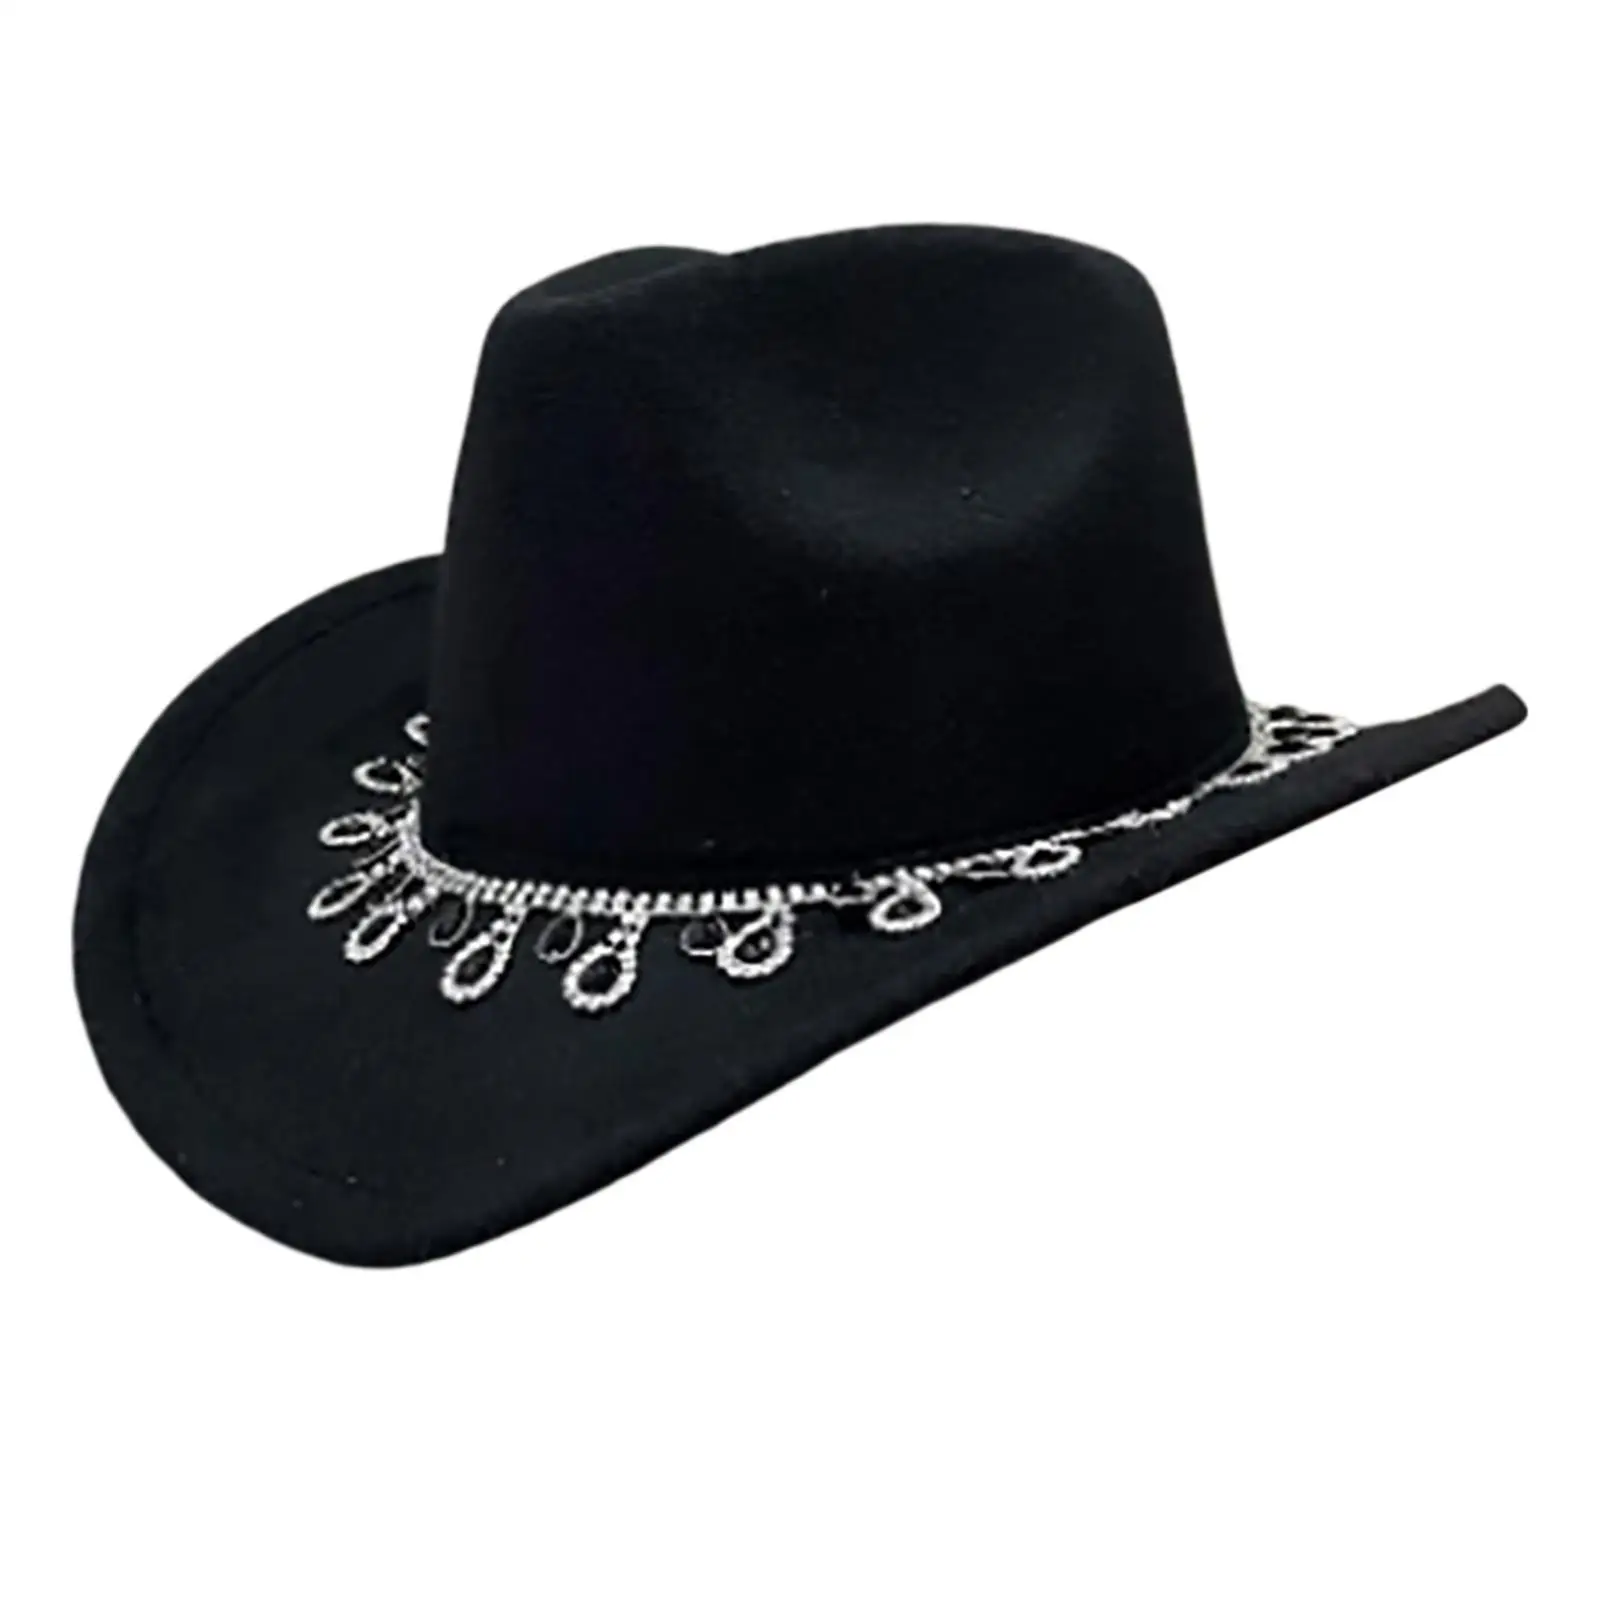 Classic Western Cowboy Hat Big Brim Photo Props Costume Cosplay for Women Men Adults Fancy Dress Holiday Fishing